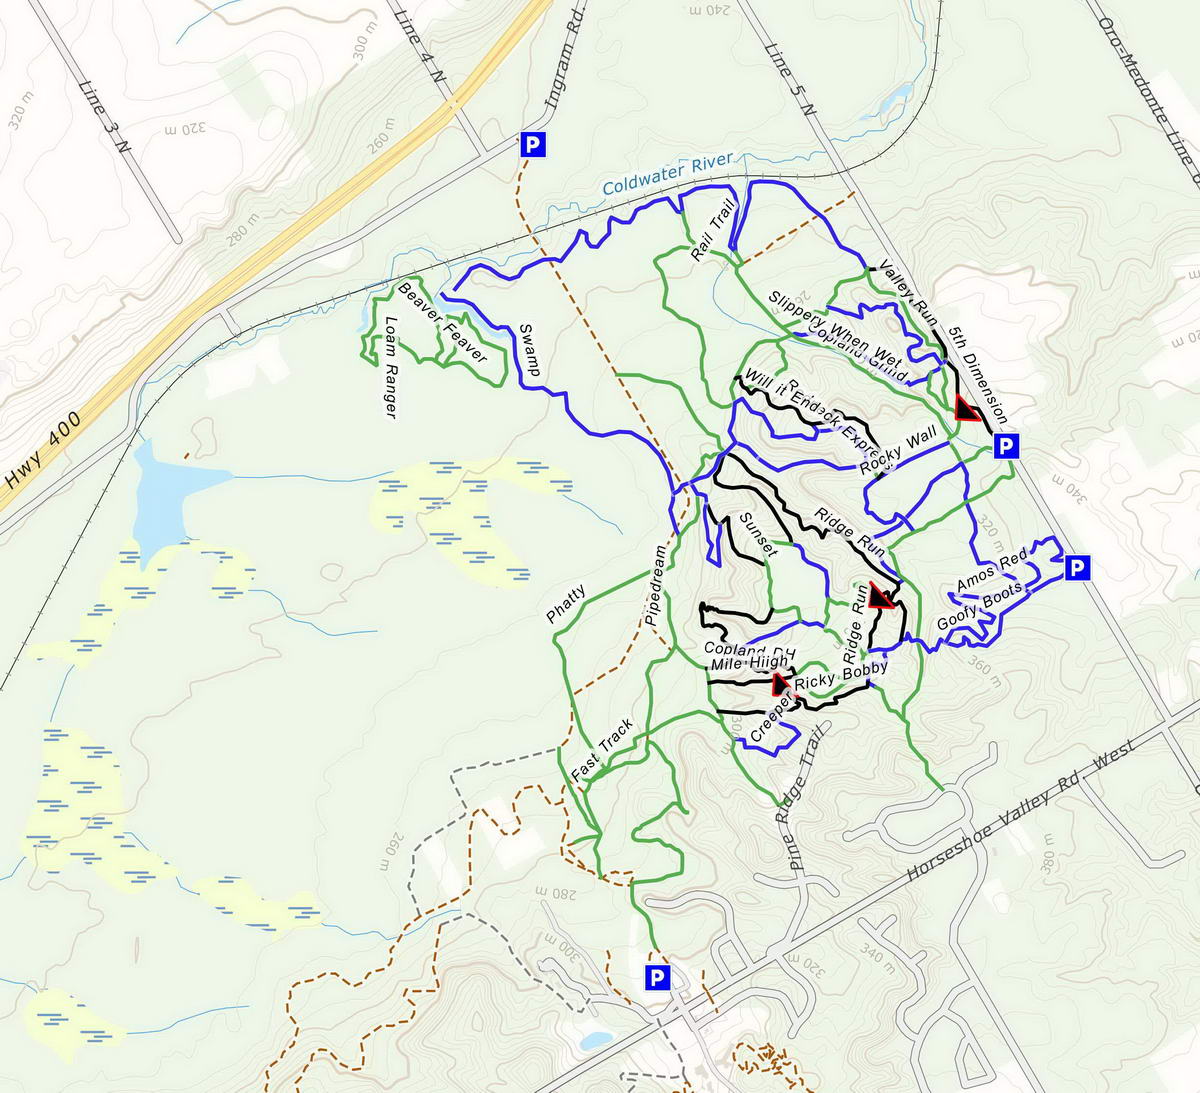 Copeland MTB trail map